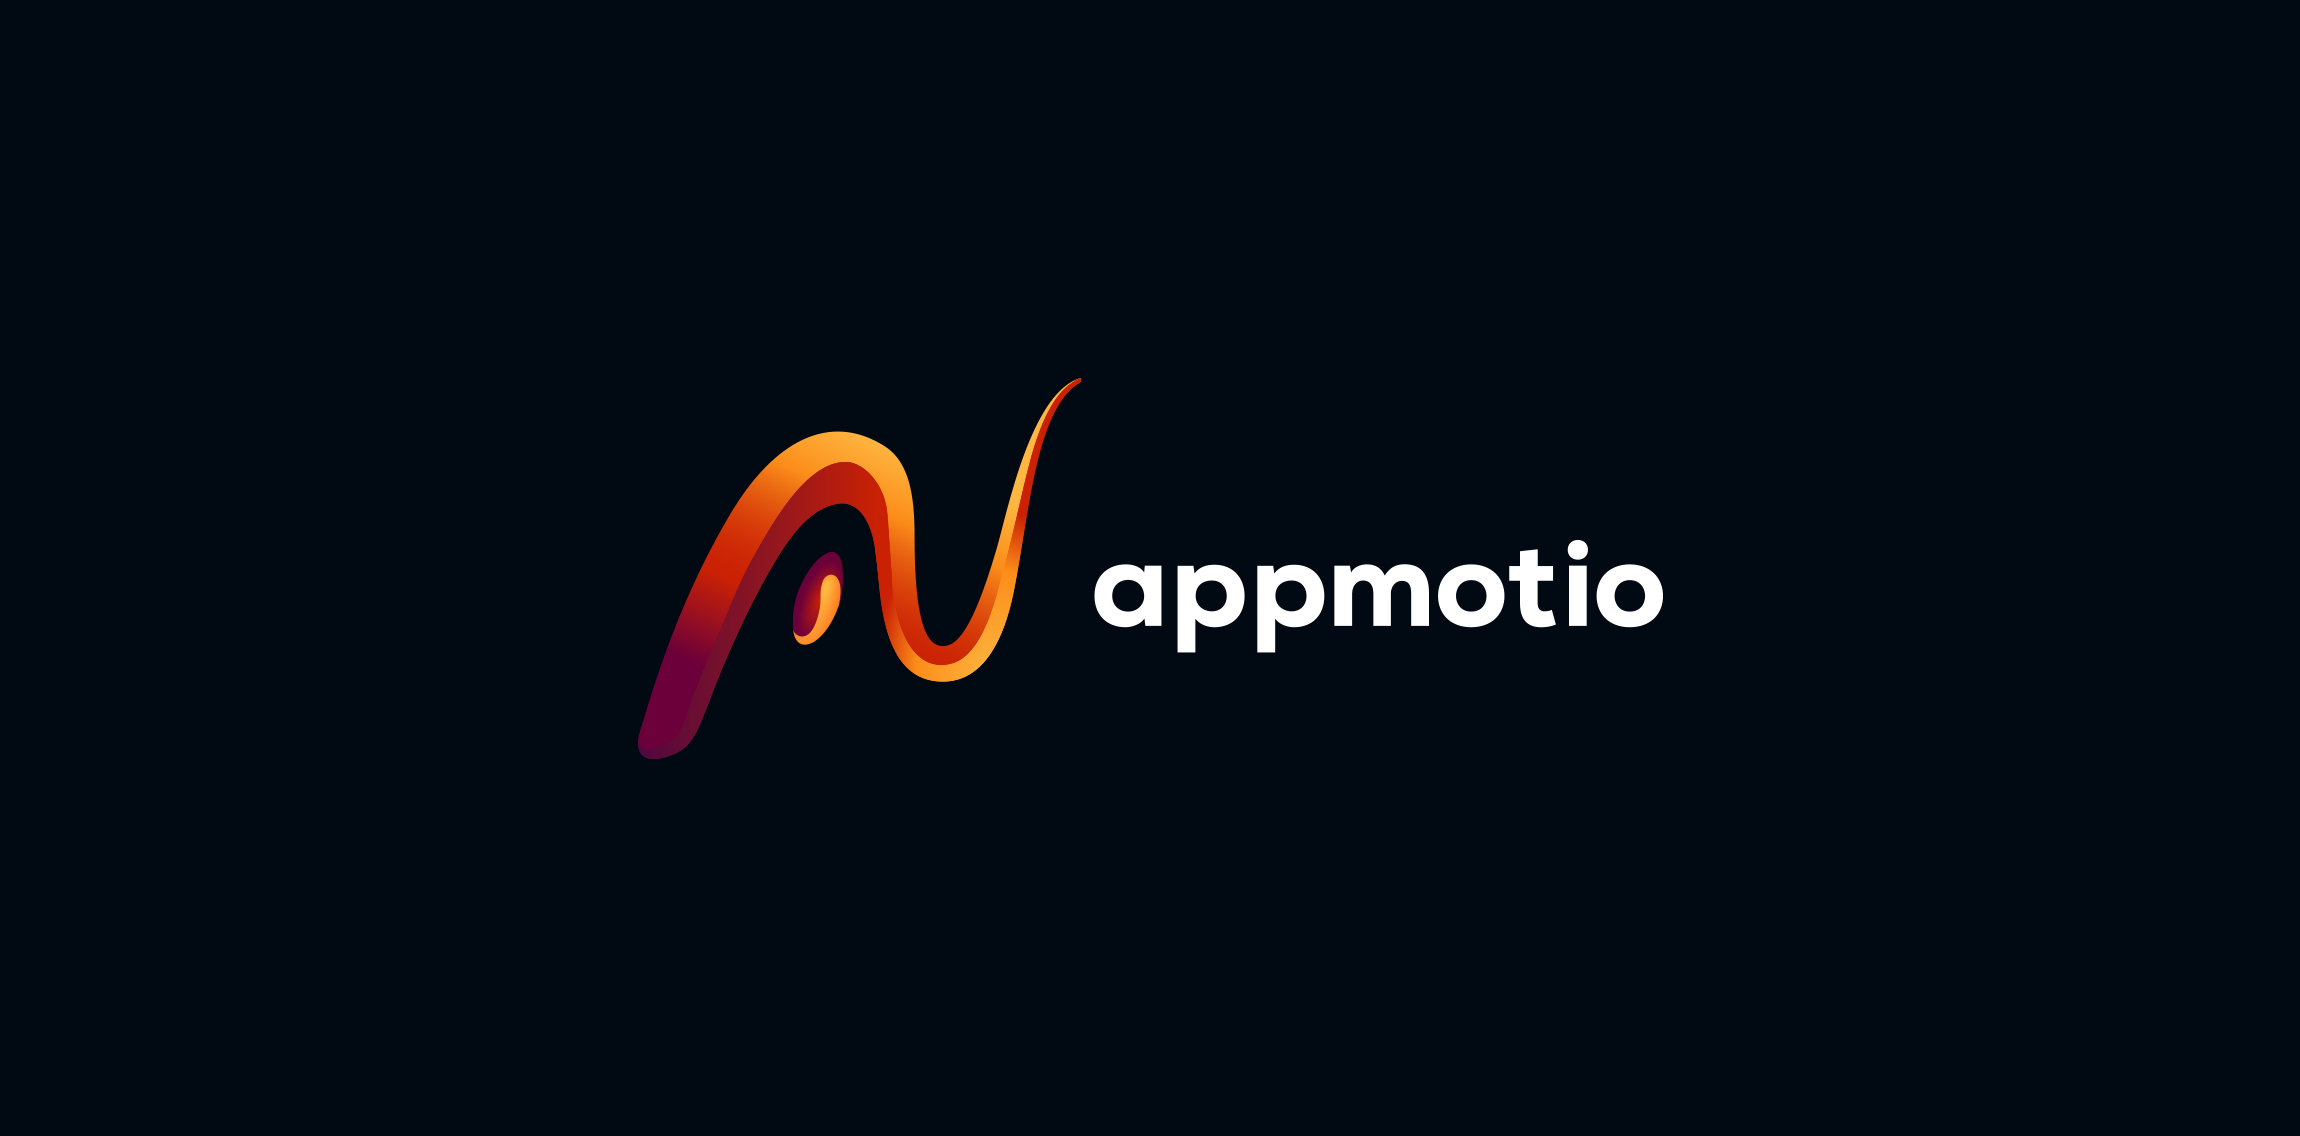 appmotio